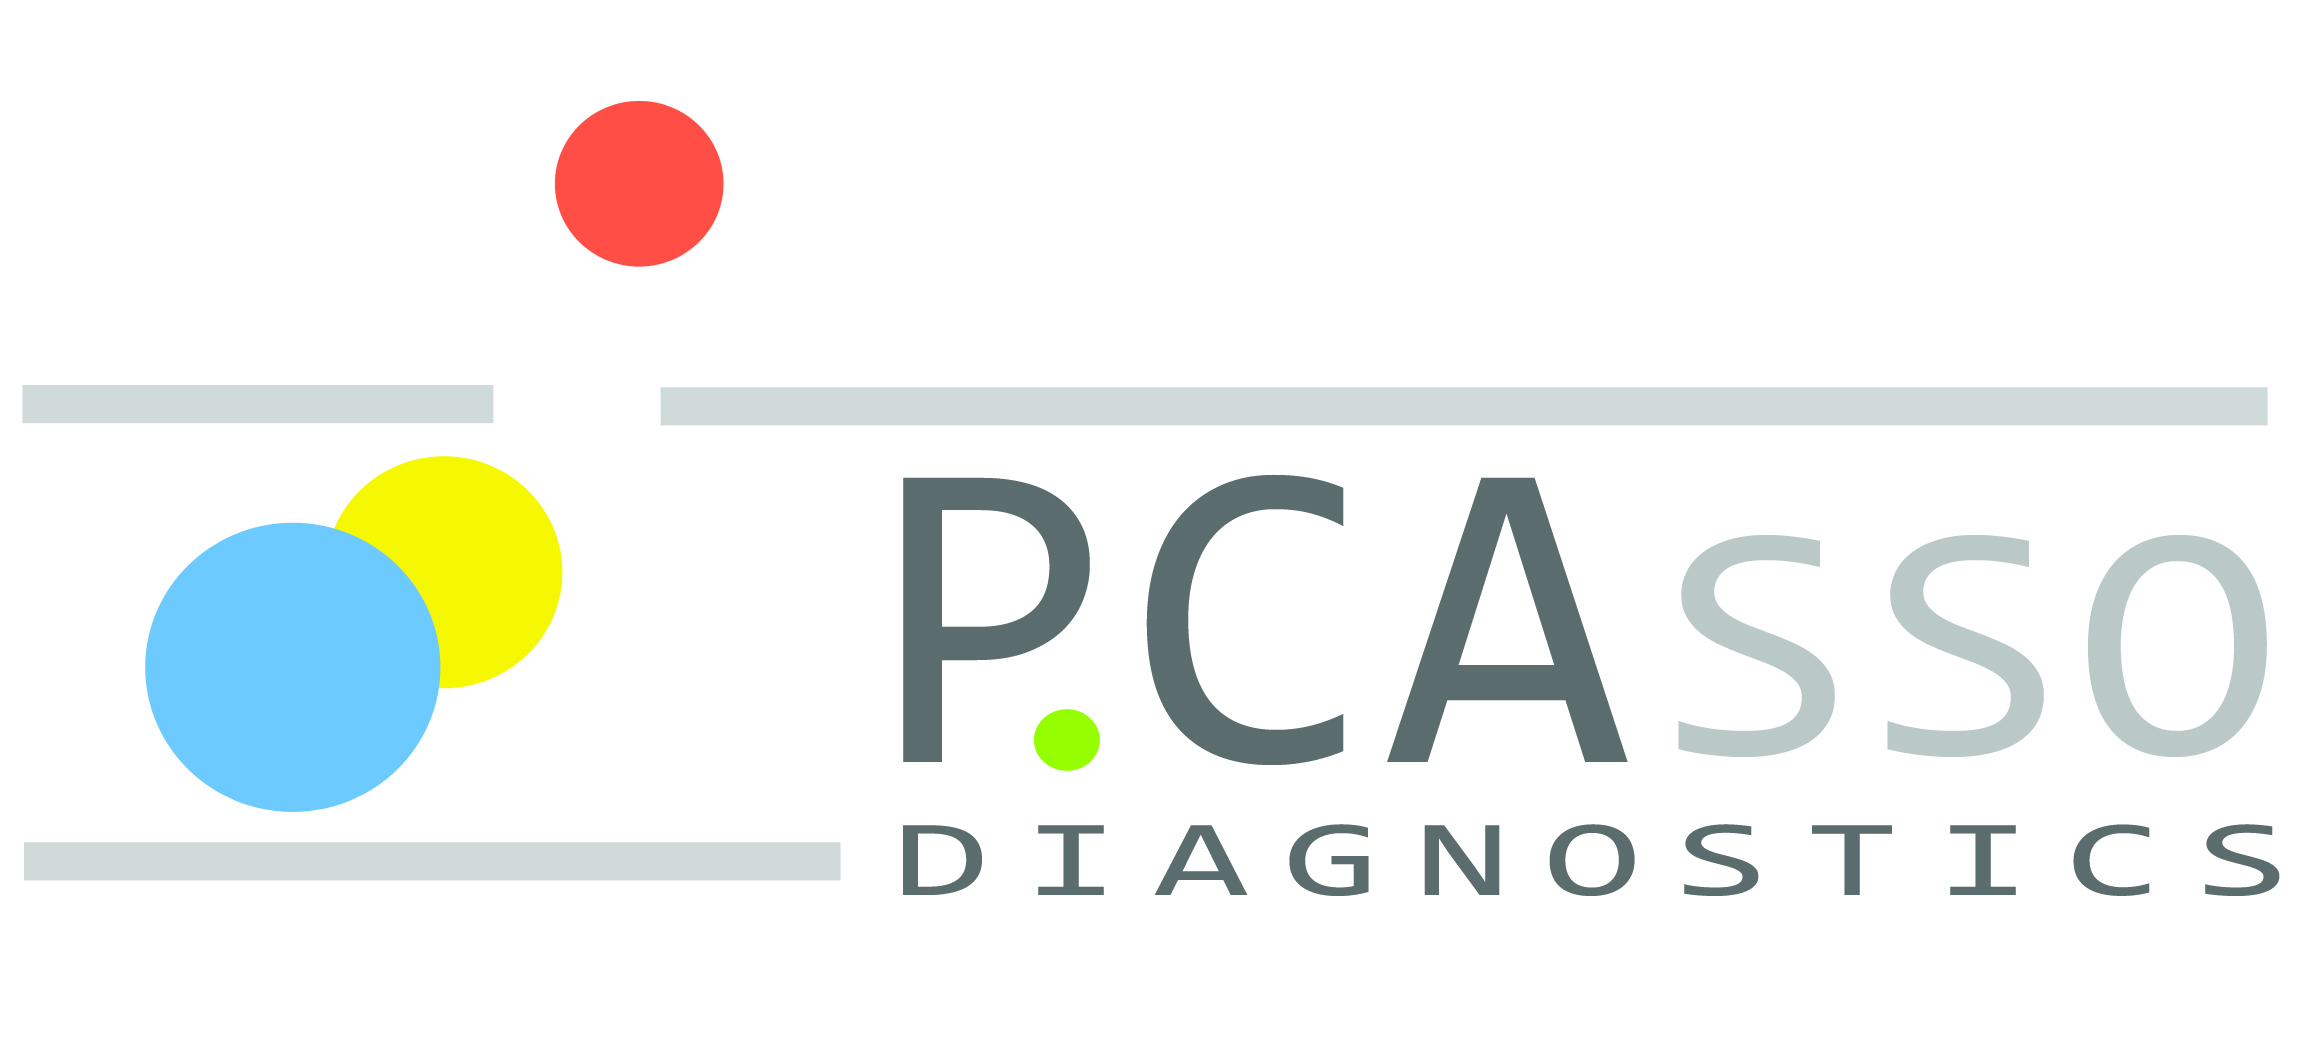 PCAsso Diagnostics